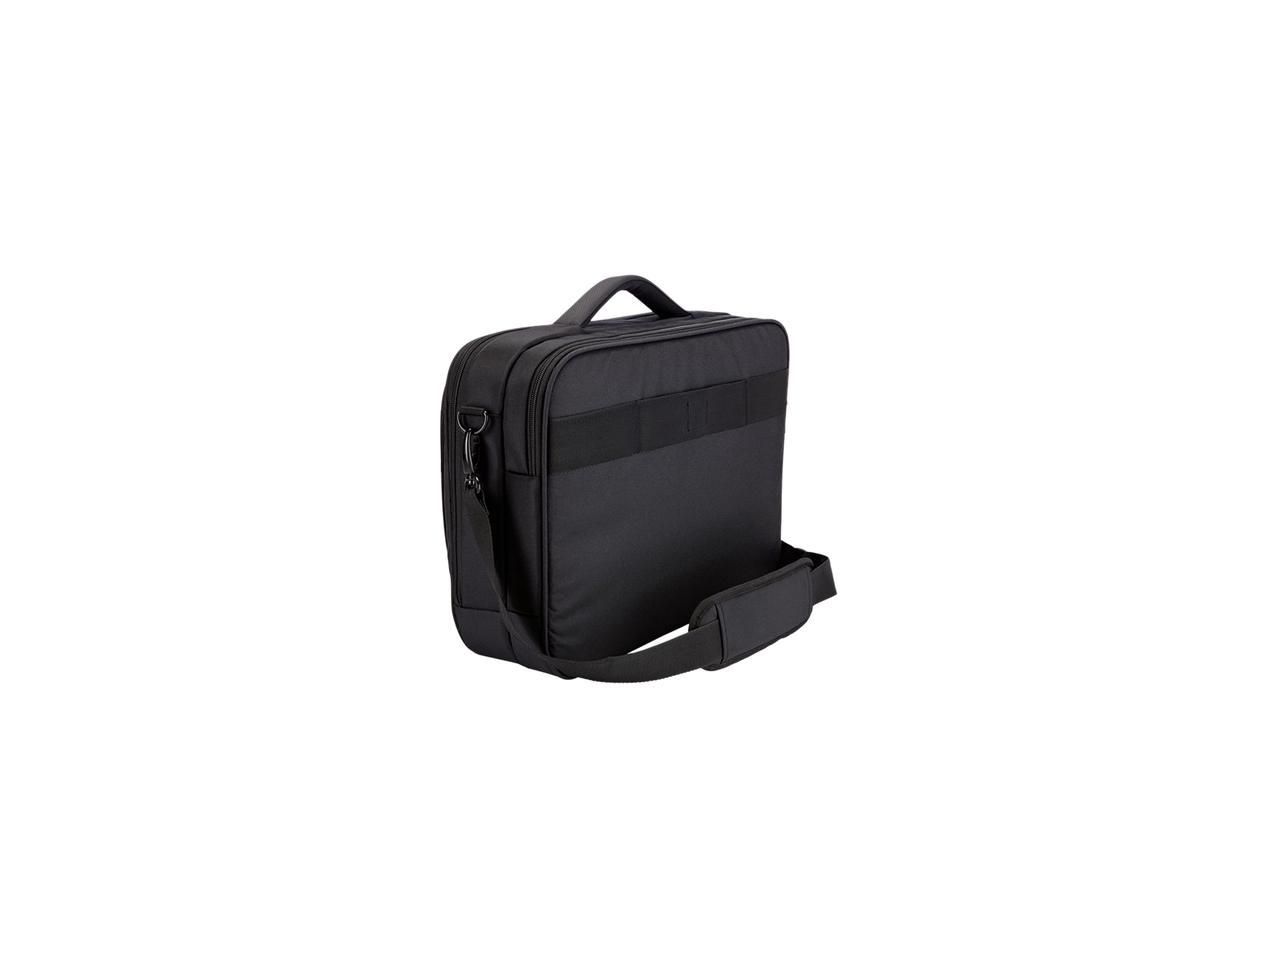 Case Logic Black Professional Laptop Briefcase Model ZLC-216